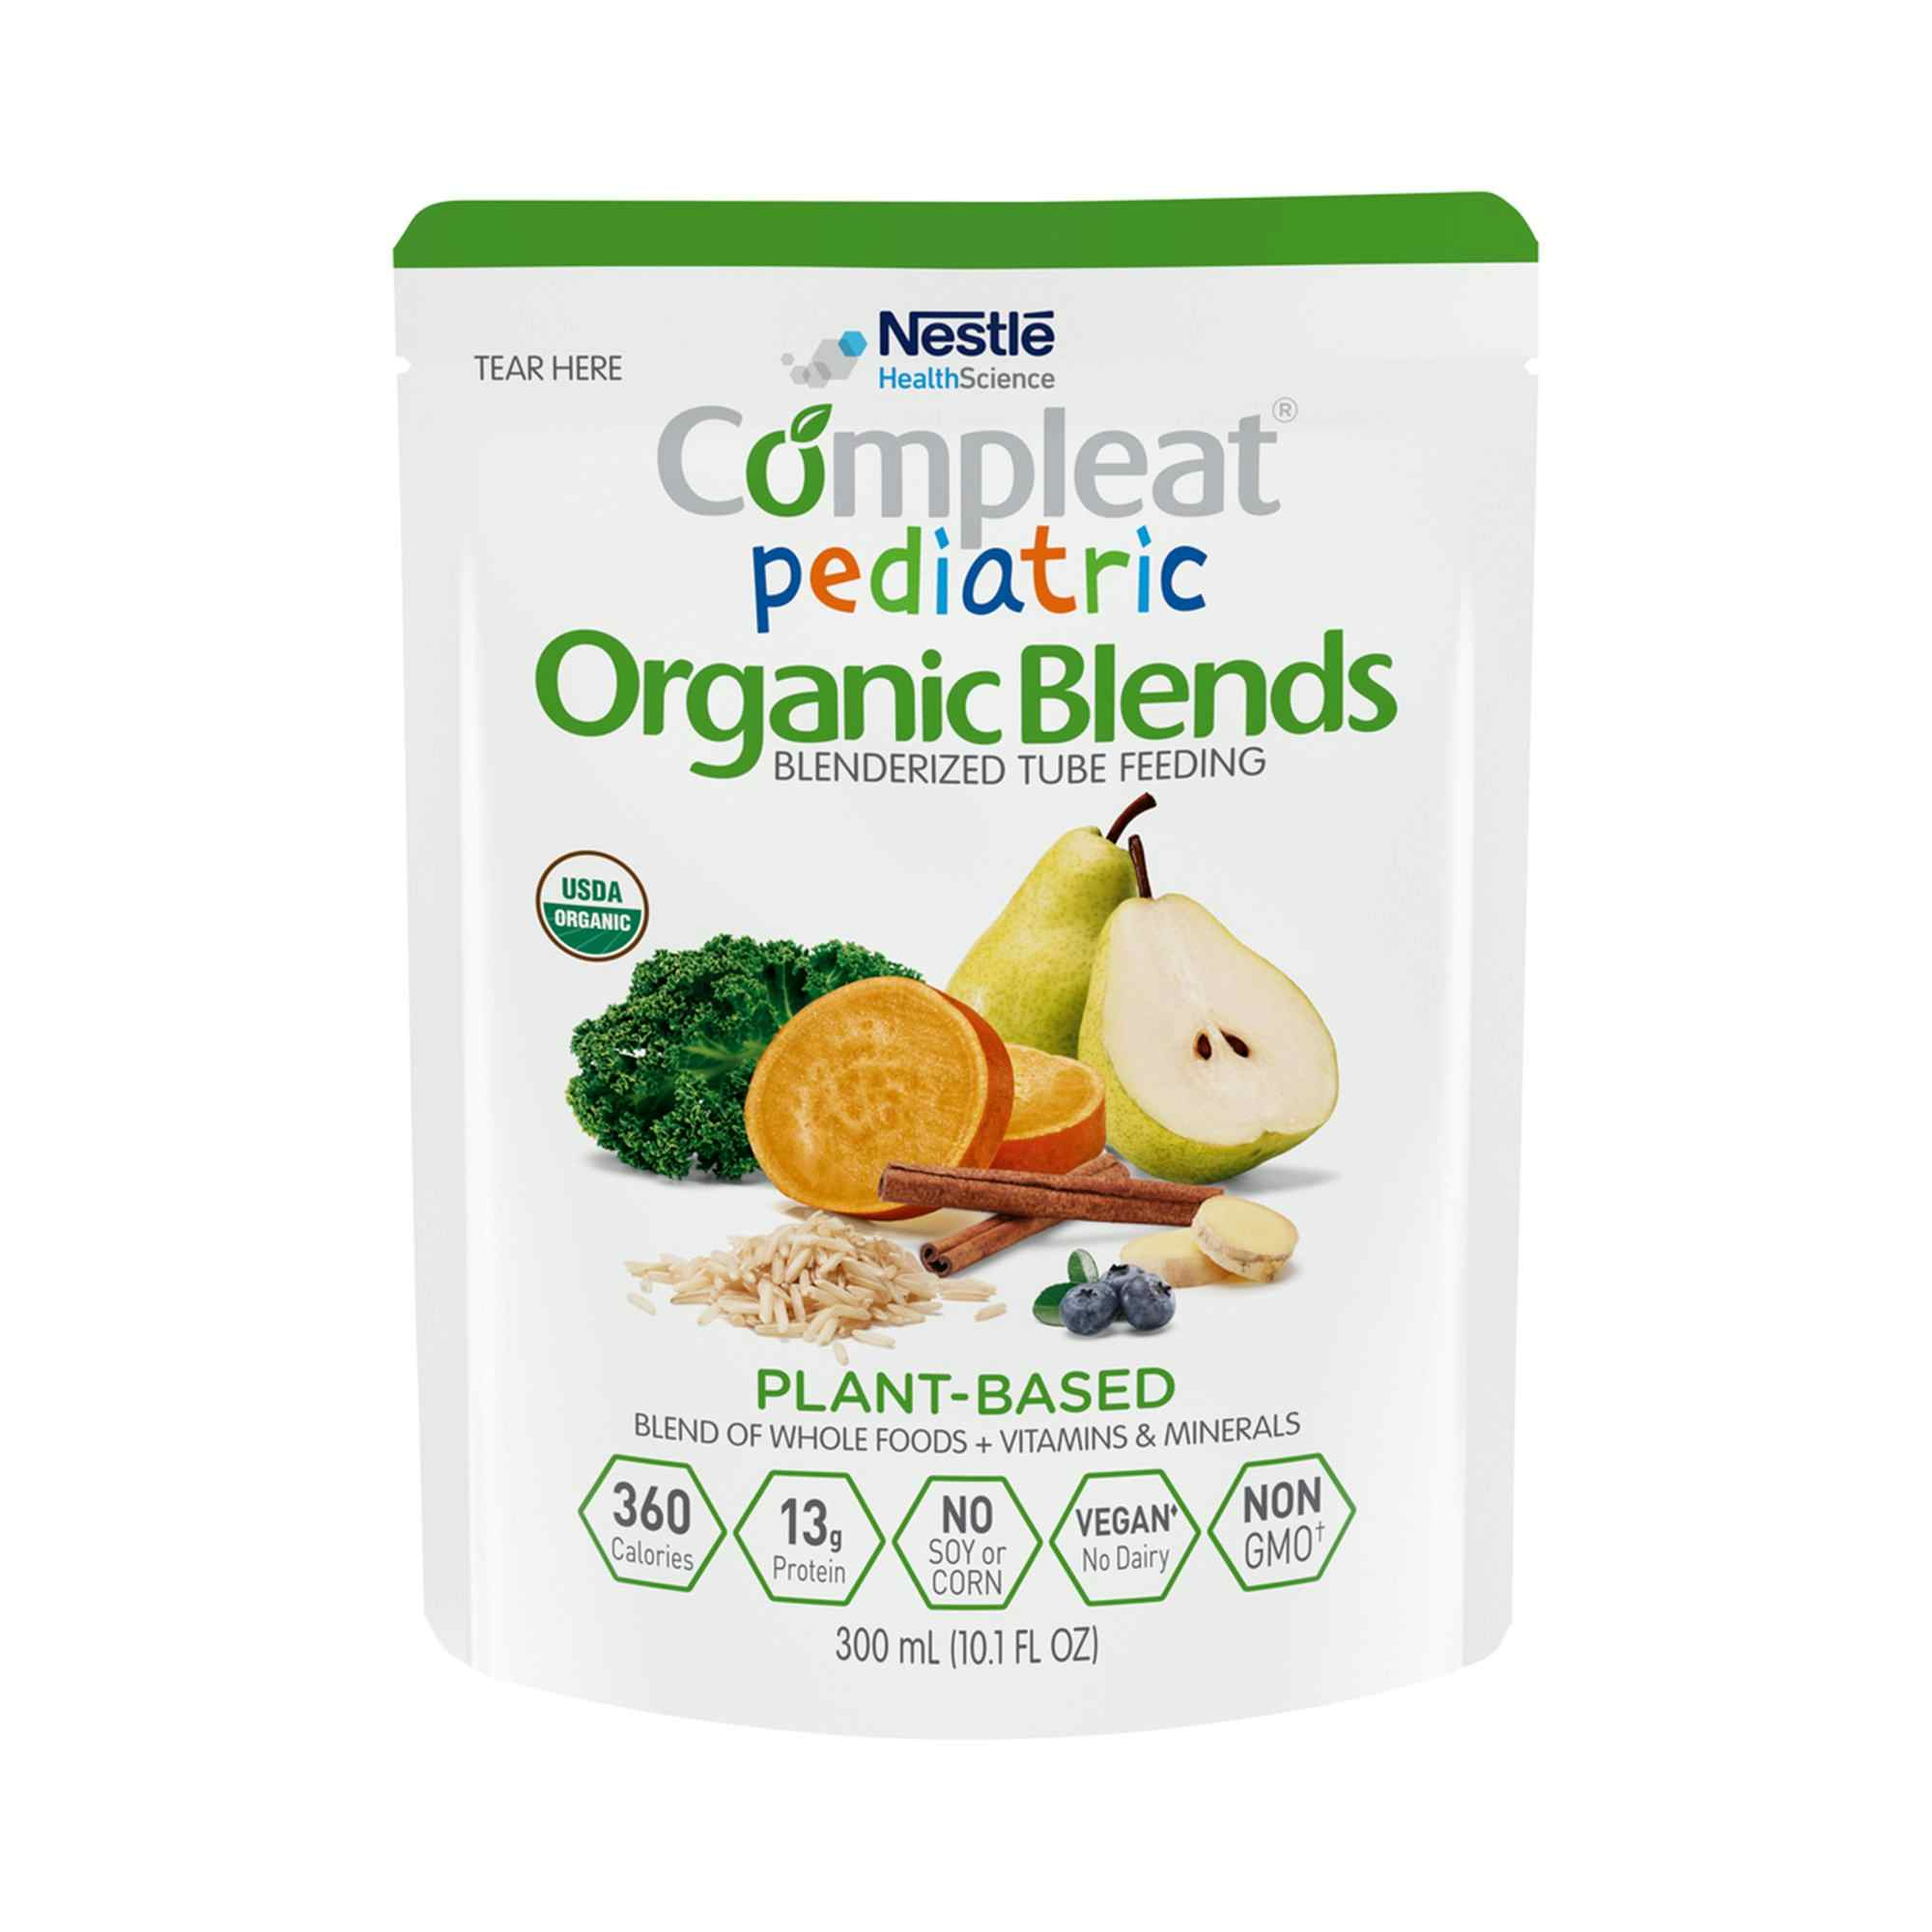 Compleat Pediatric Organic Blends Plant-Based Tube Feeding, 10.1 oz